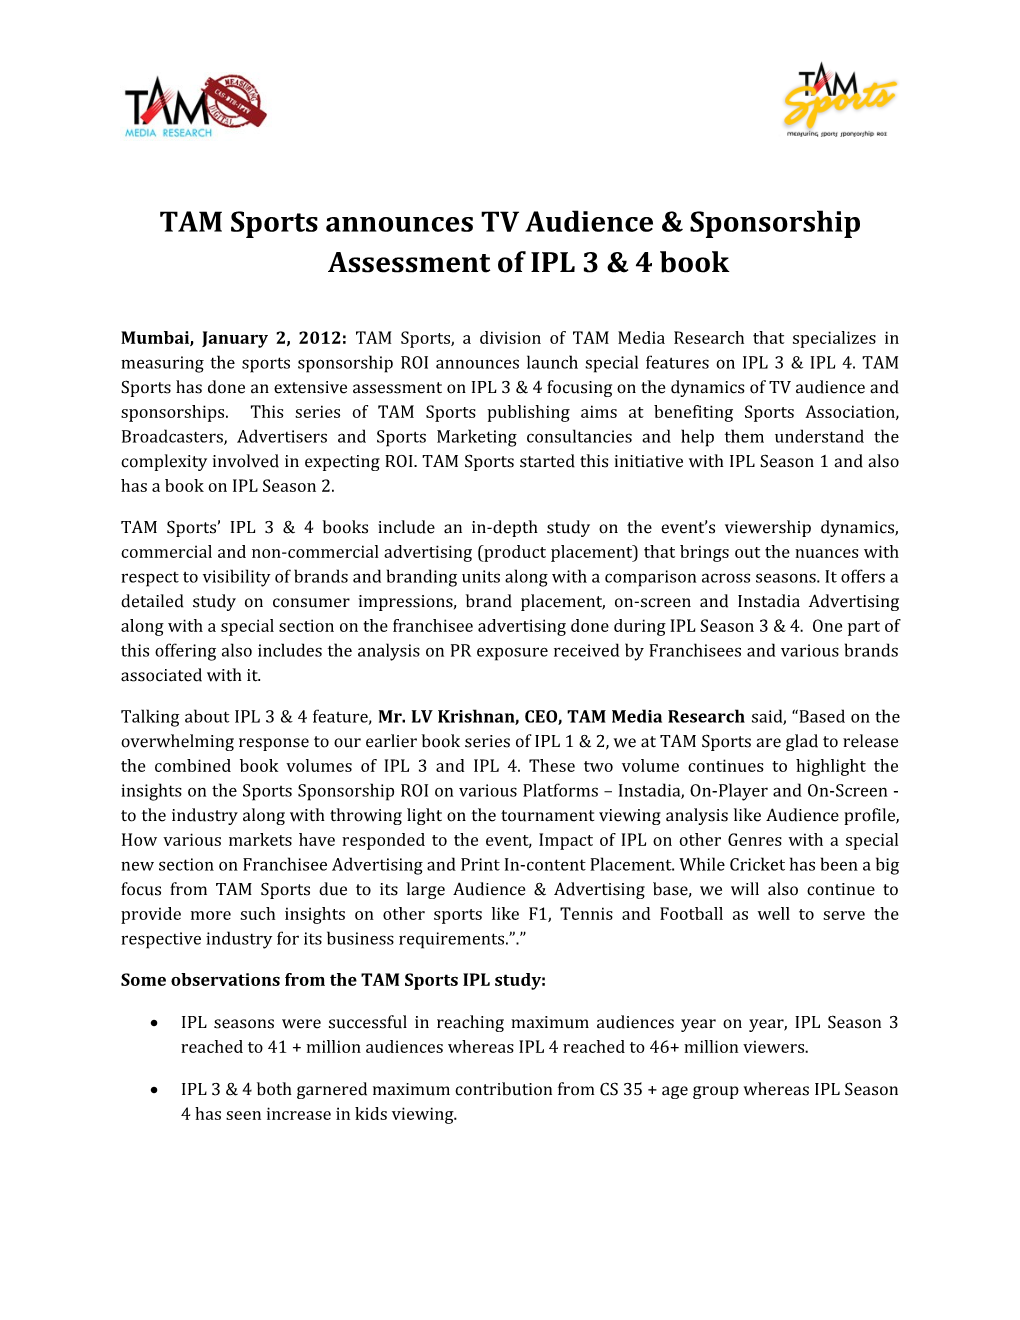 TAM Sports Announces TV Audience & Sponsorship Assessment of IPL 3 & 4 Book